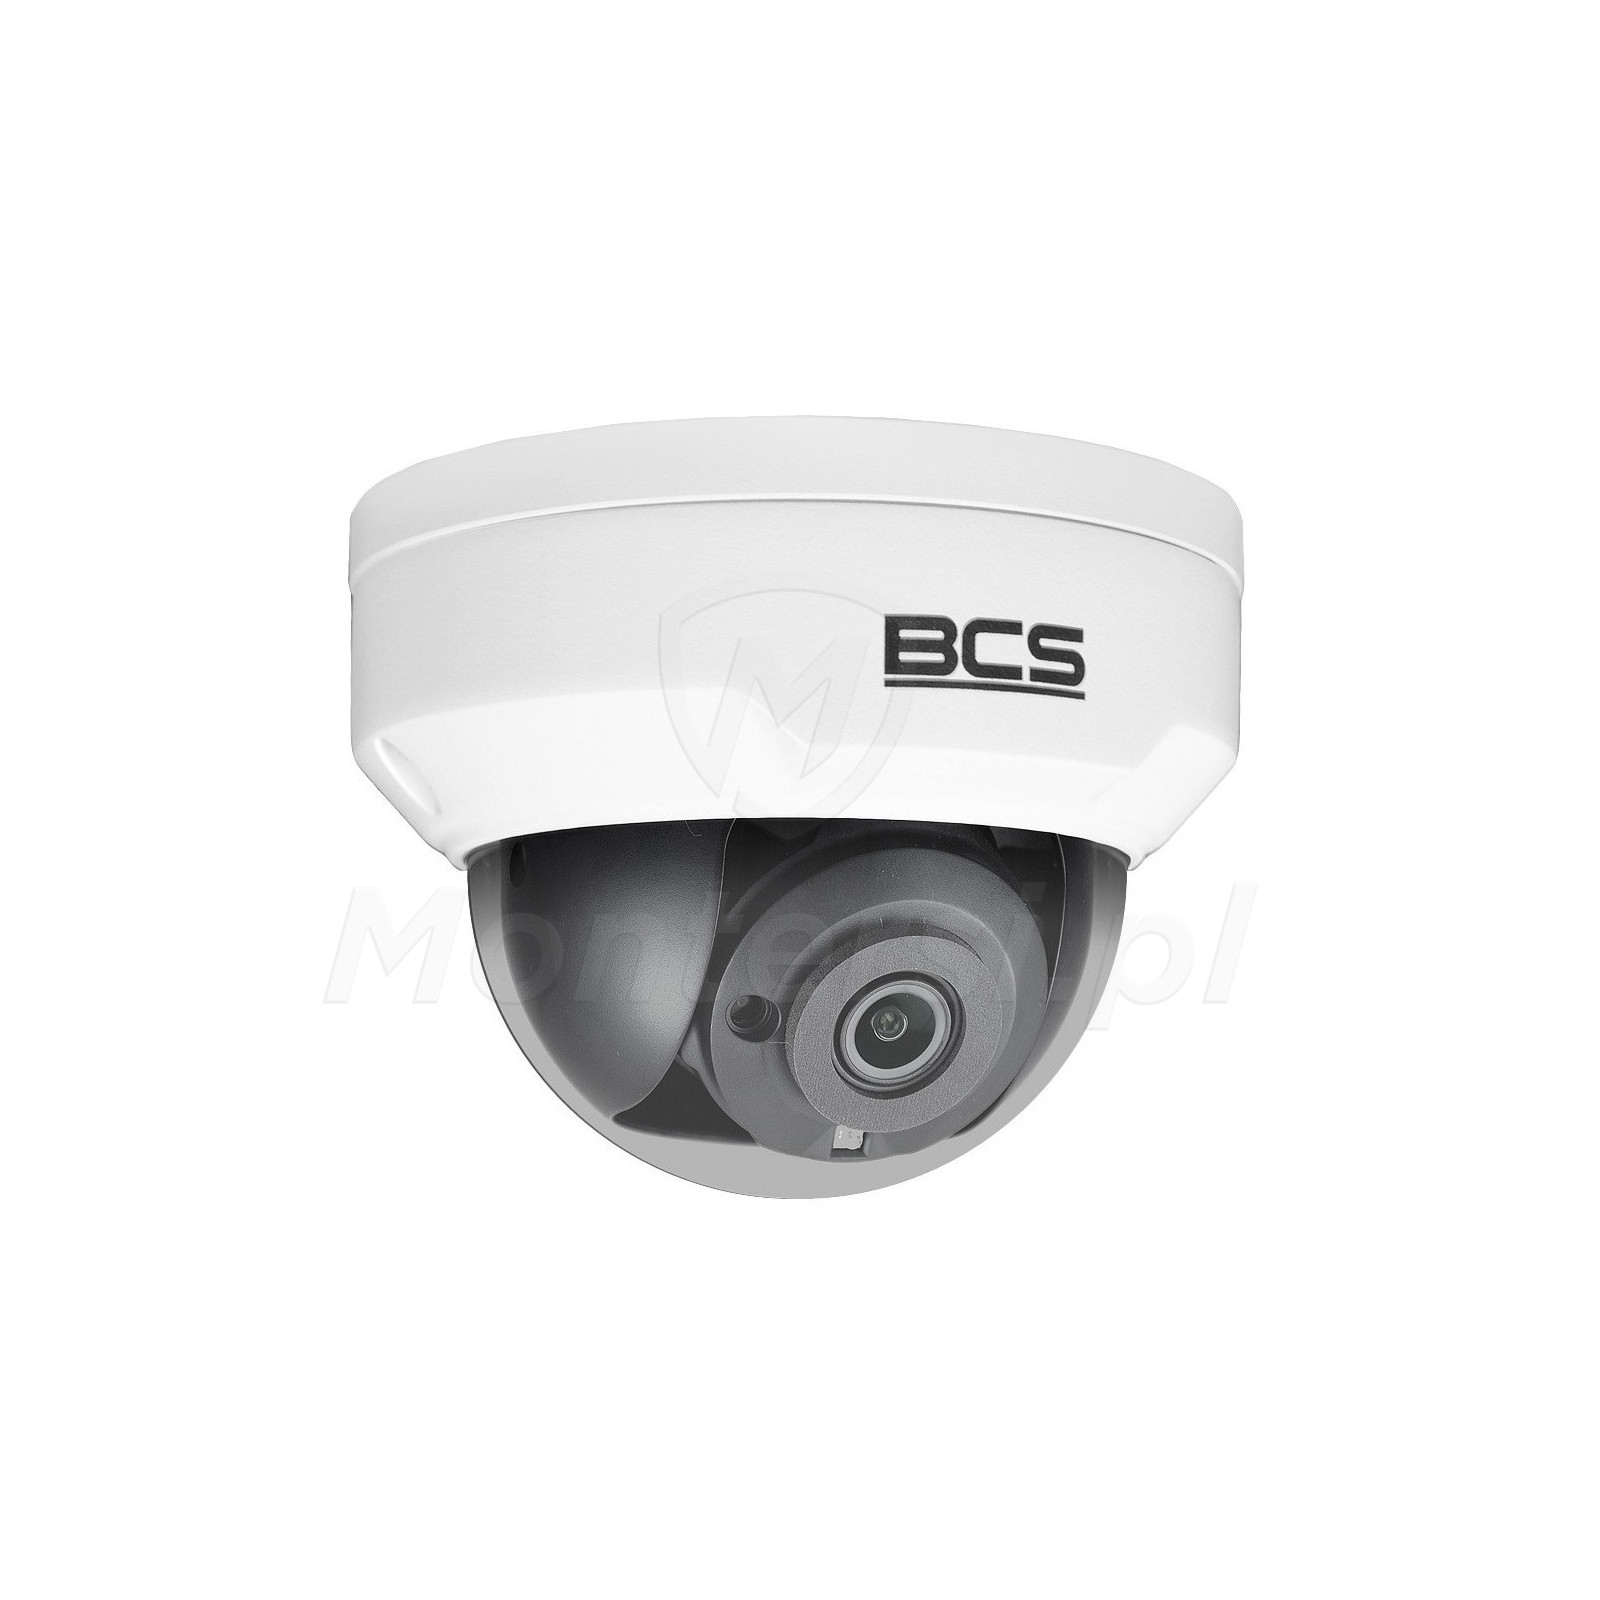 Wandaloodporna kamera IP BCS-P-DIP25FSR3-Ai2